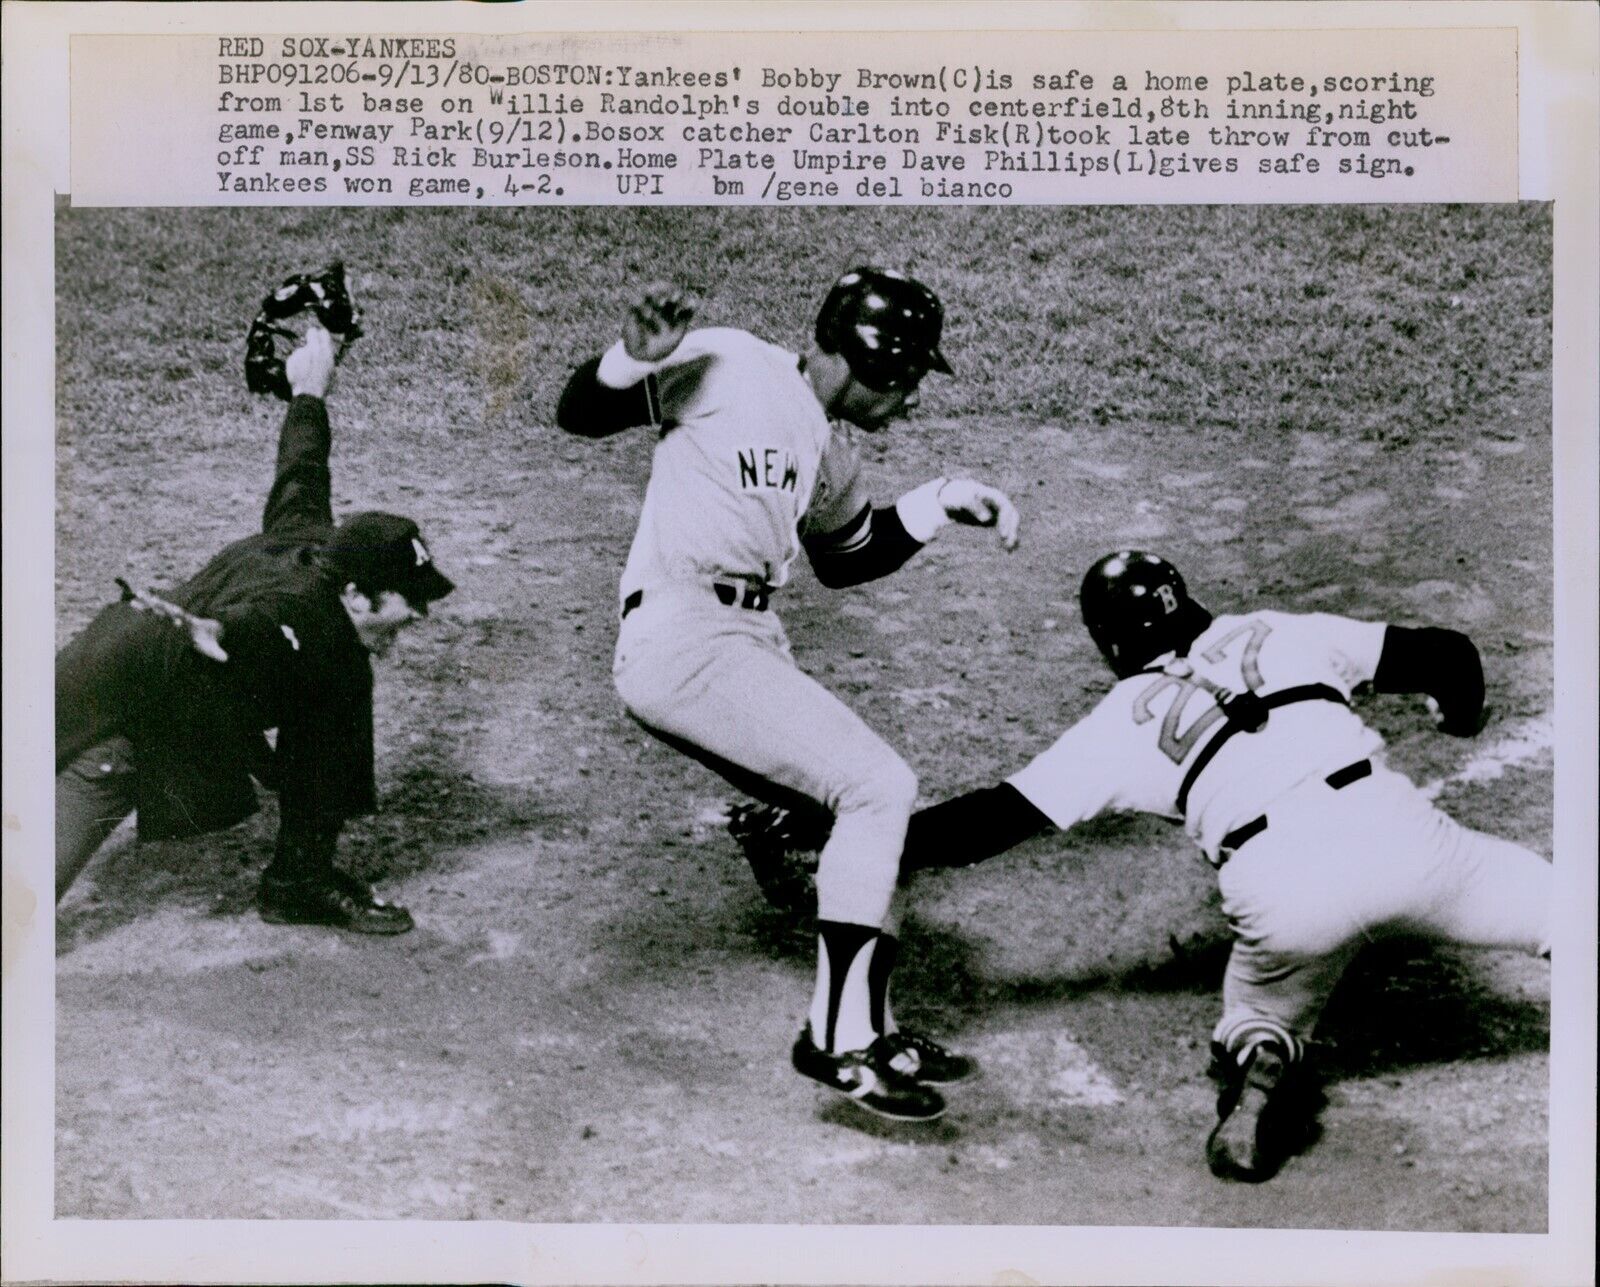 LG776 1980 Orig Gene Del Bianco Photo BOBBY BROWN Yankees CARLTON FISK Red Sox